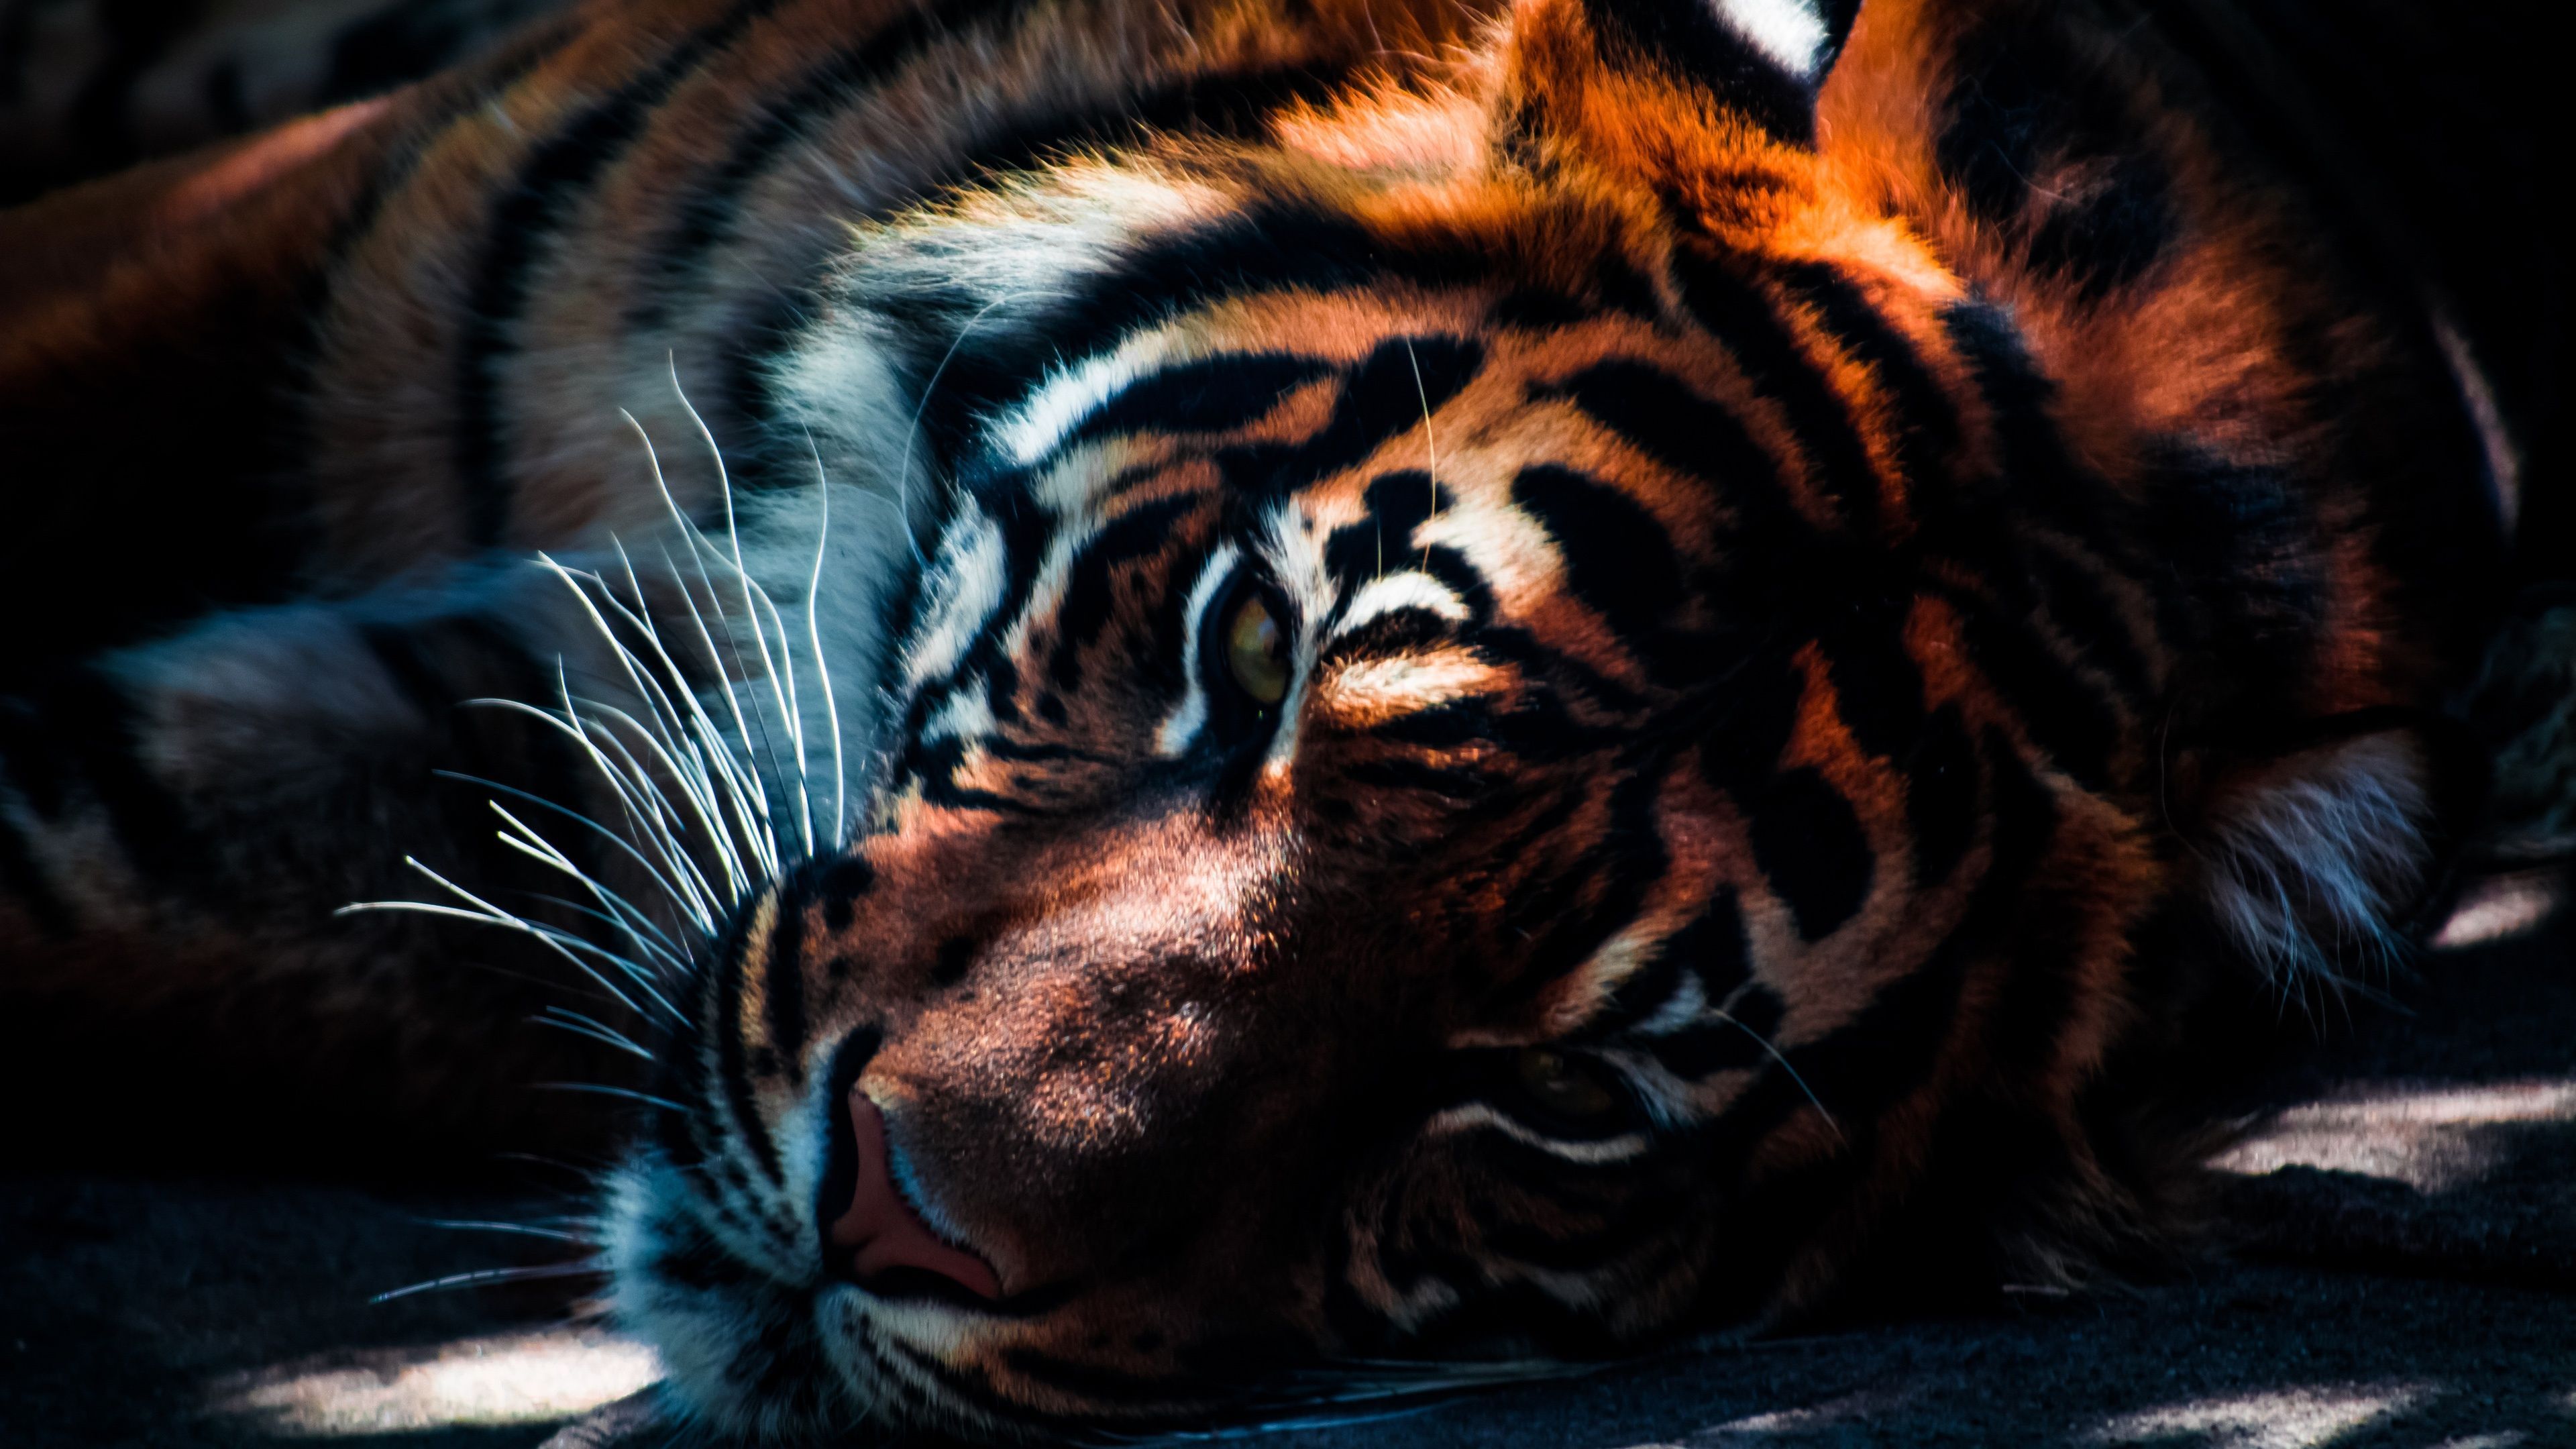 Tigers,Cheetahs,Leopards Wallpapers & HD Desktop Backgrounds -